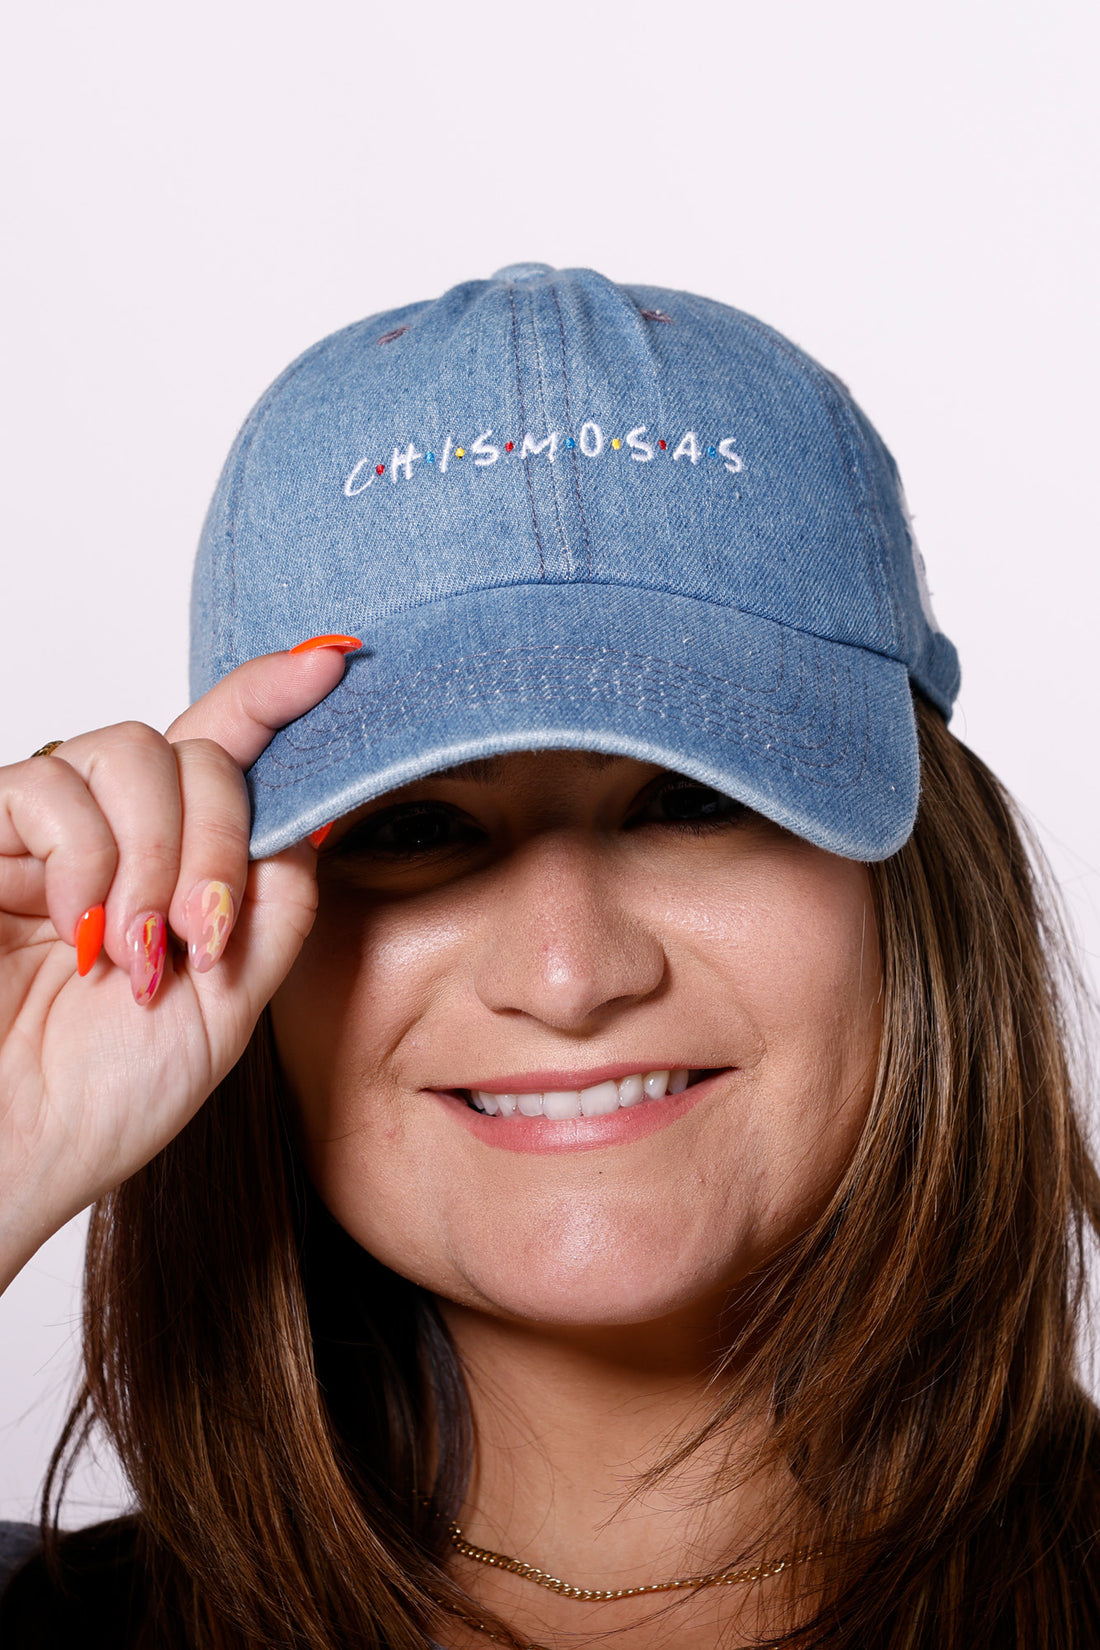 Martha of Miami Wearing Chismosas denim hat